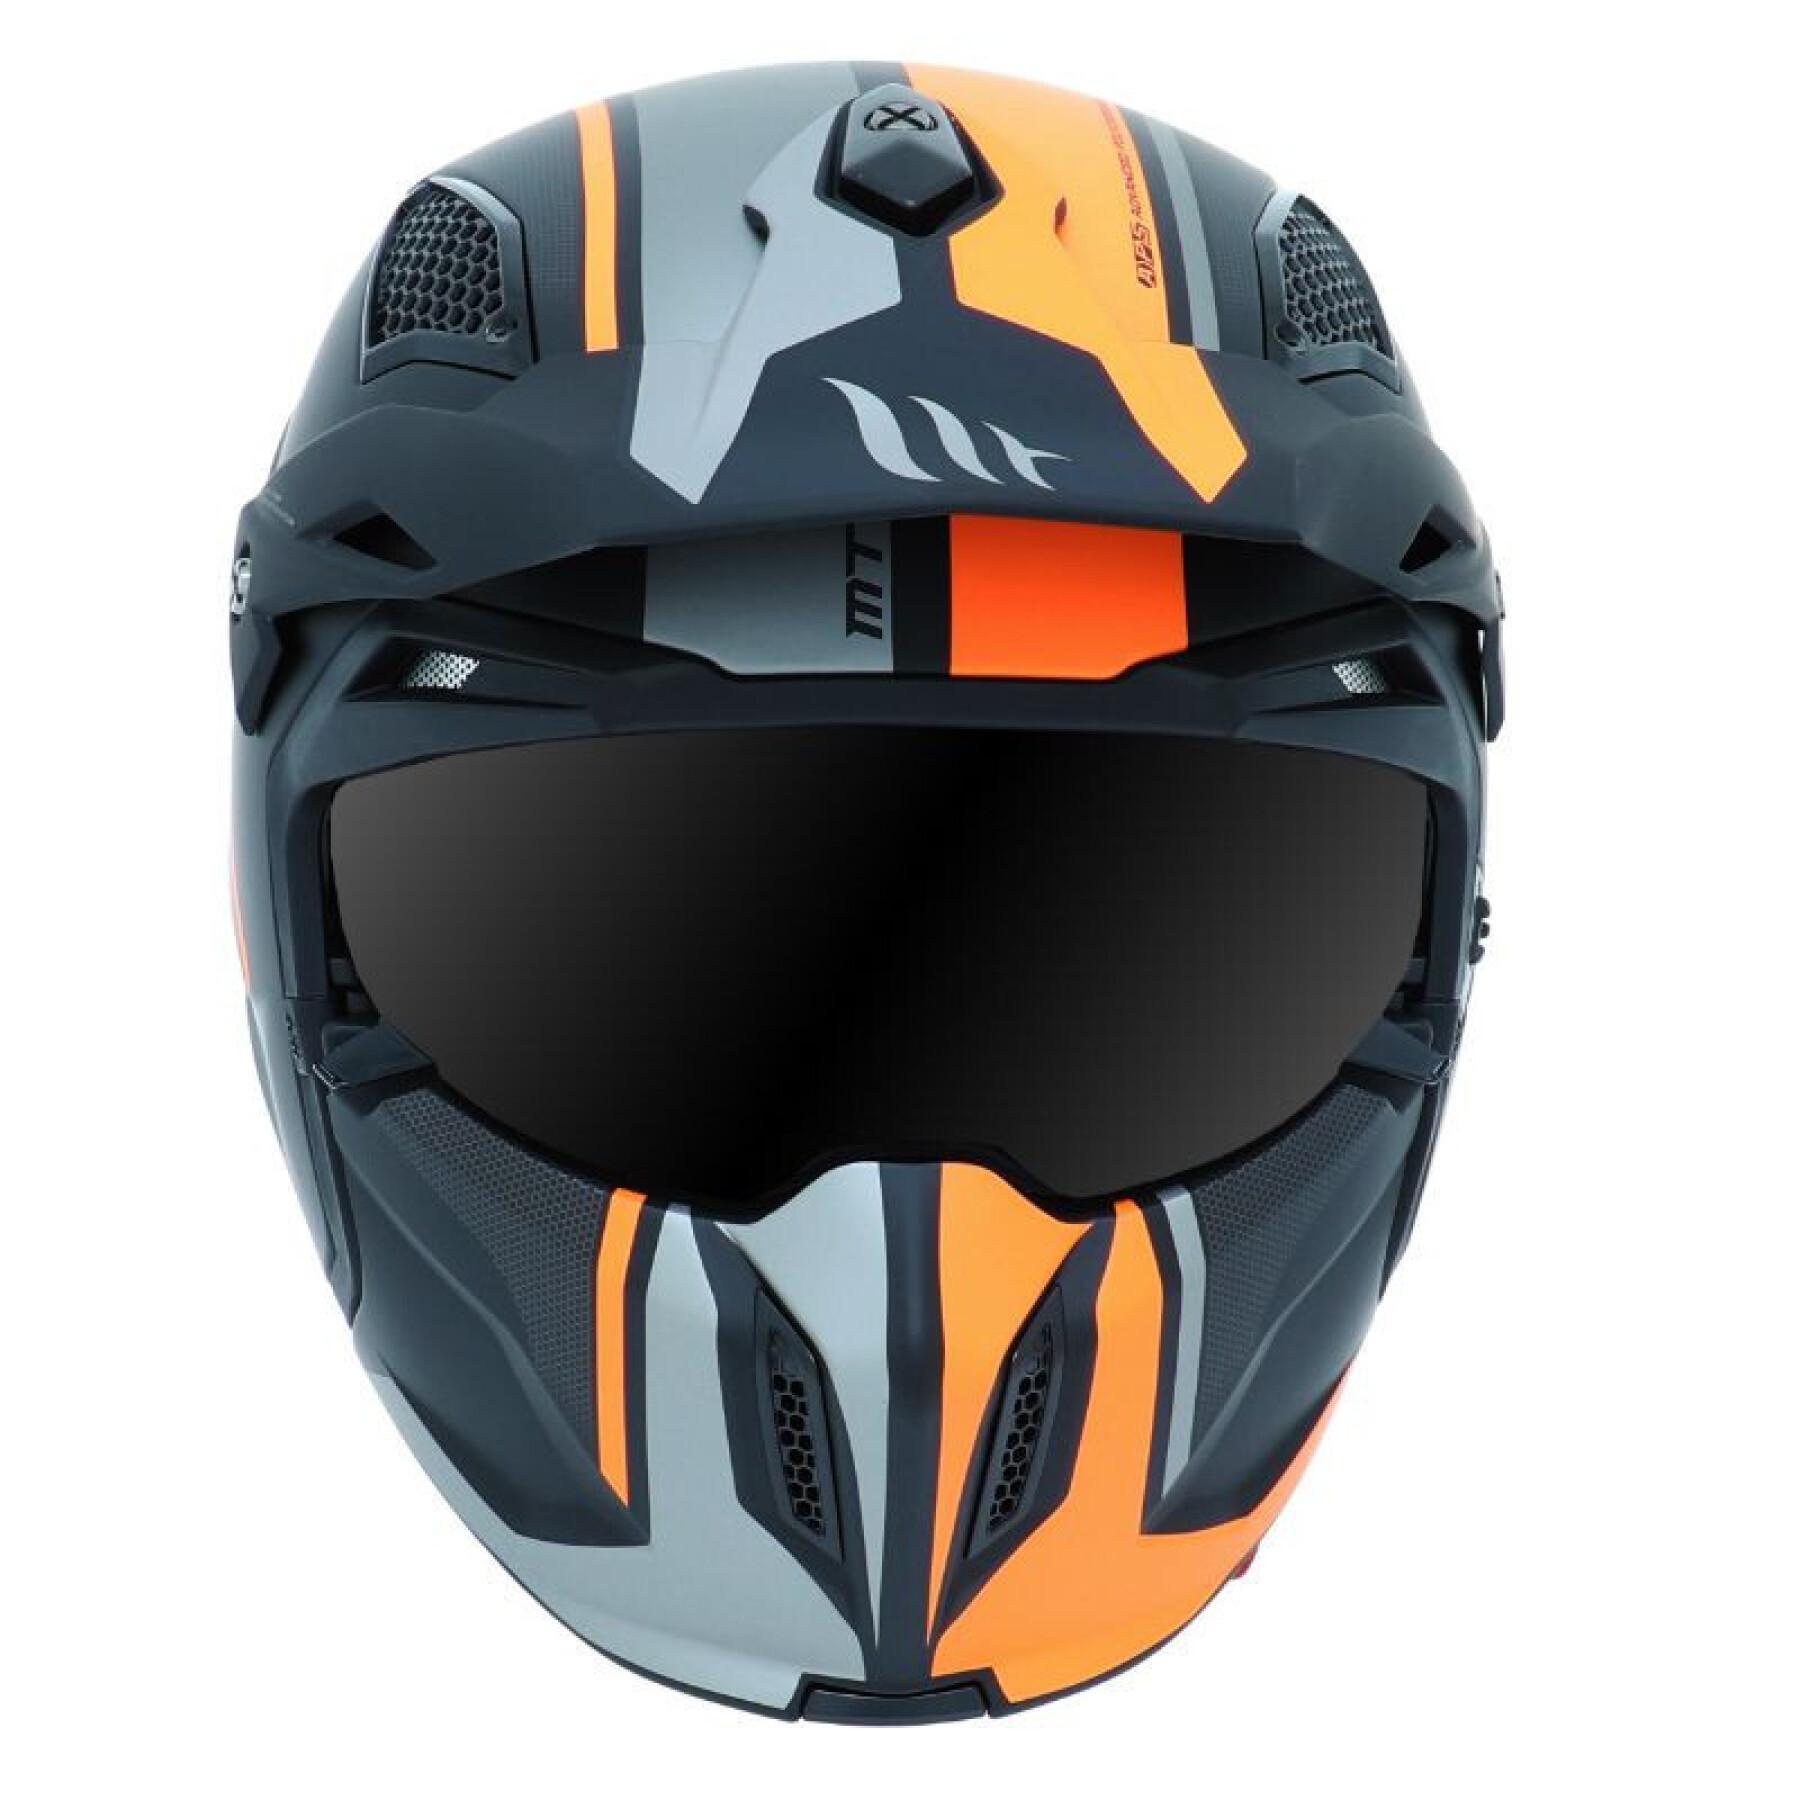 Casque trial simple ecran dark transformable avec mentonniere amovible MT Helmets MT STREetFIGHTER SV SKULL(livre avec un ecran supplementaire orange)